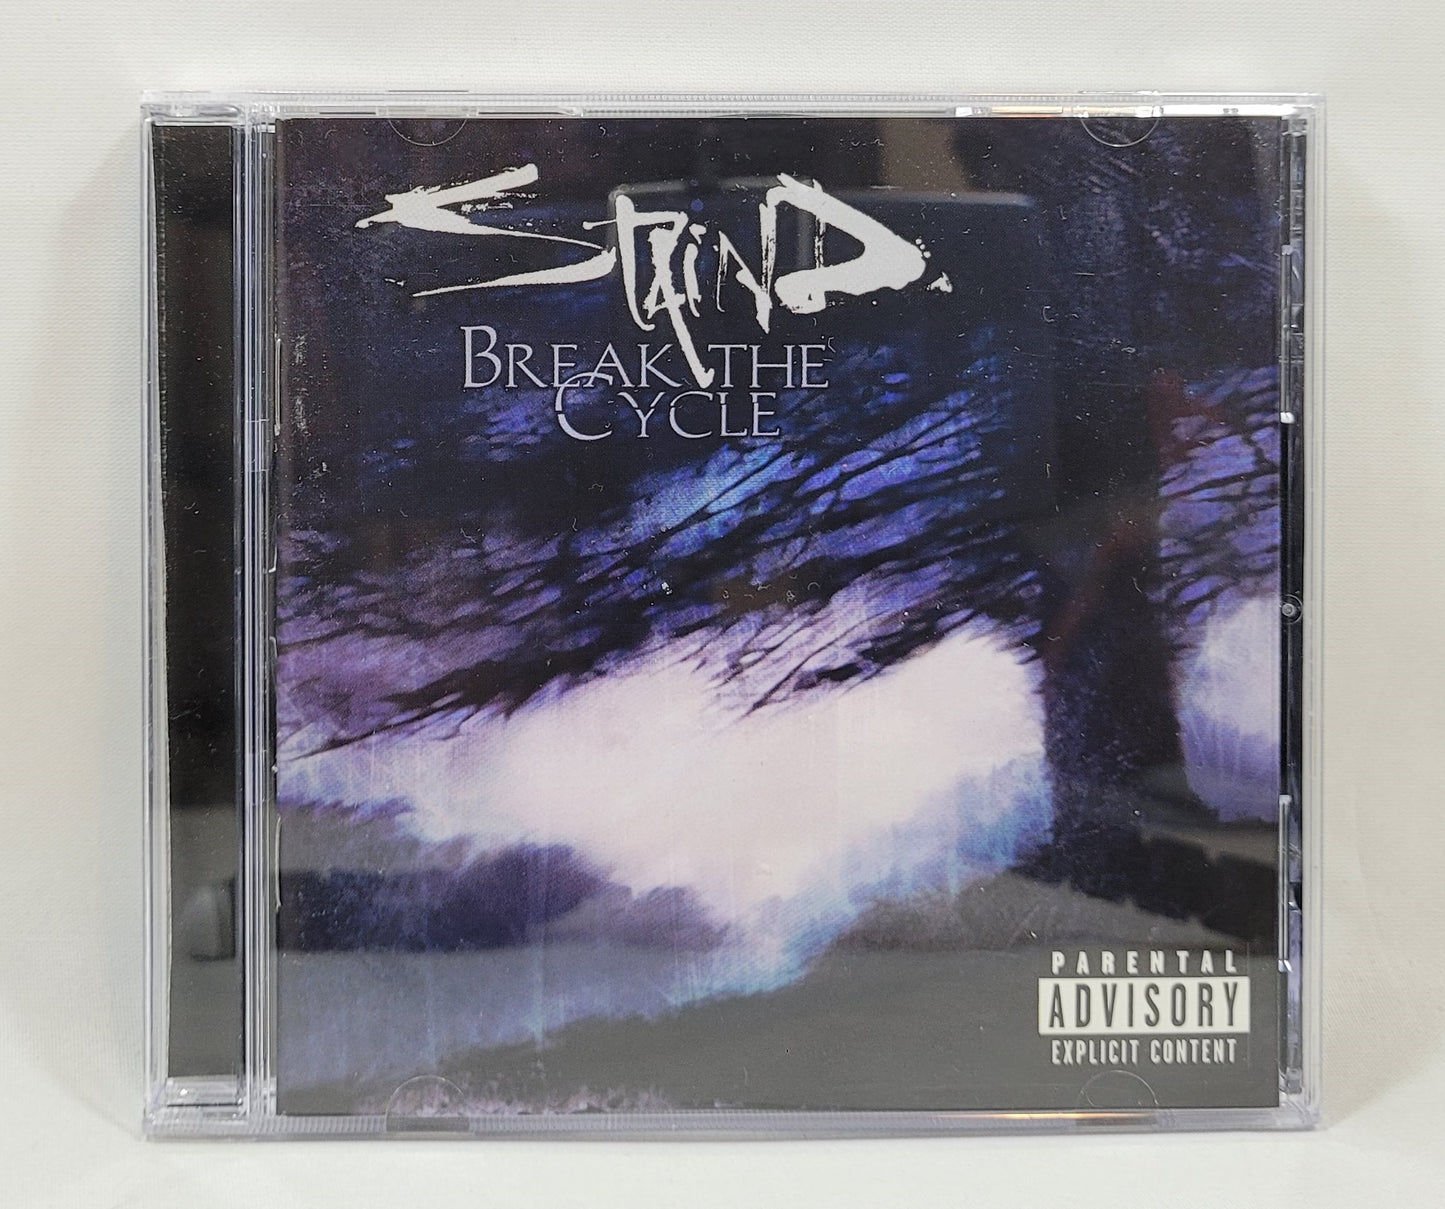 Straind - Break the Cycle [CD]